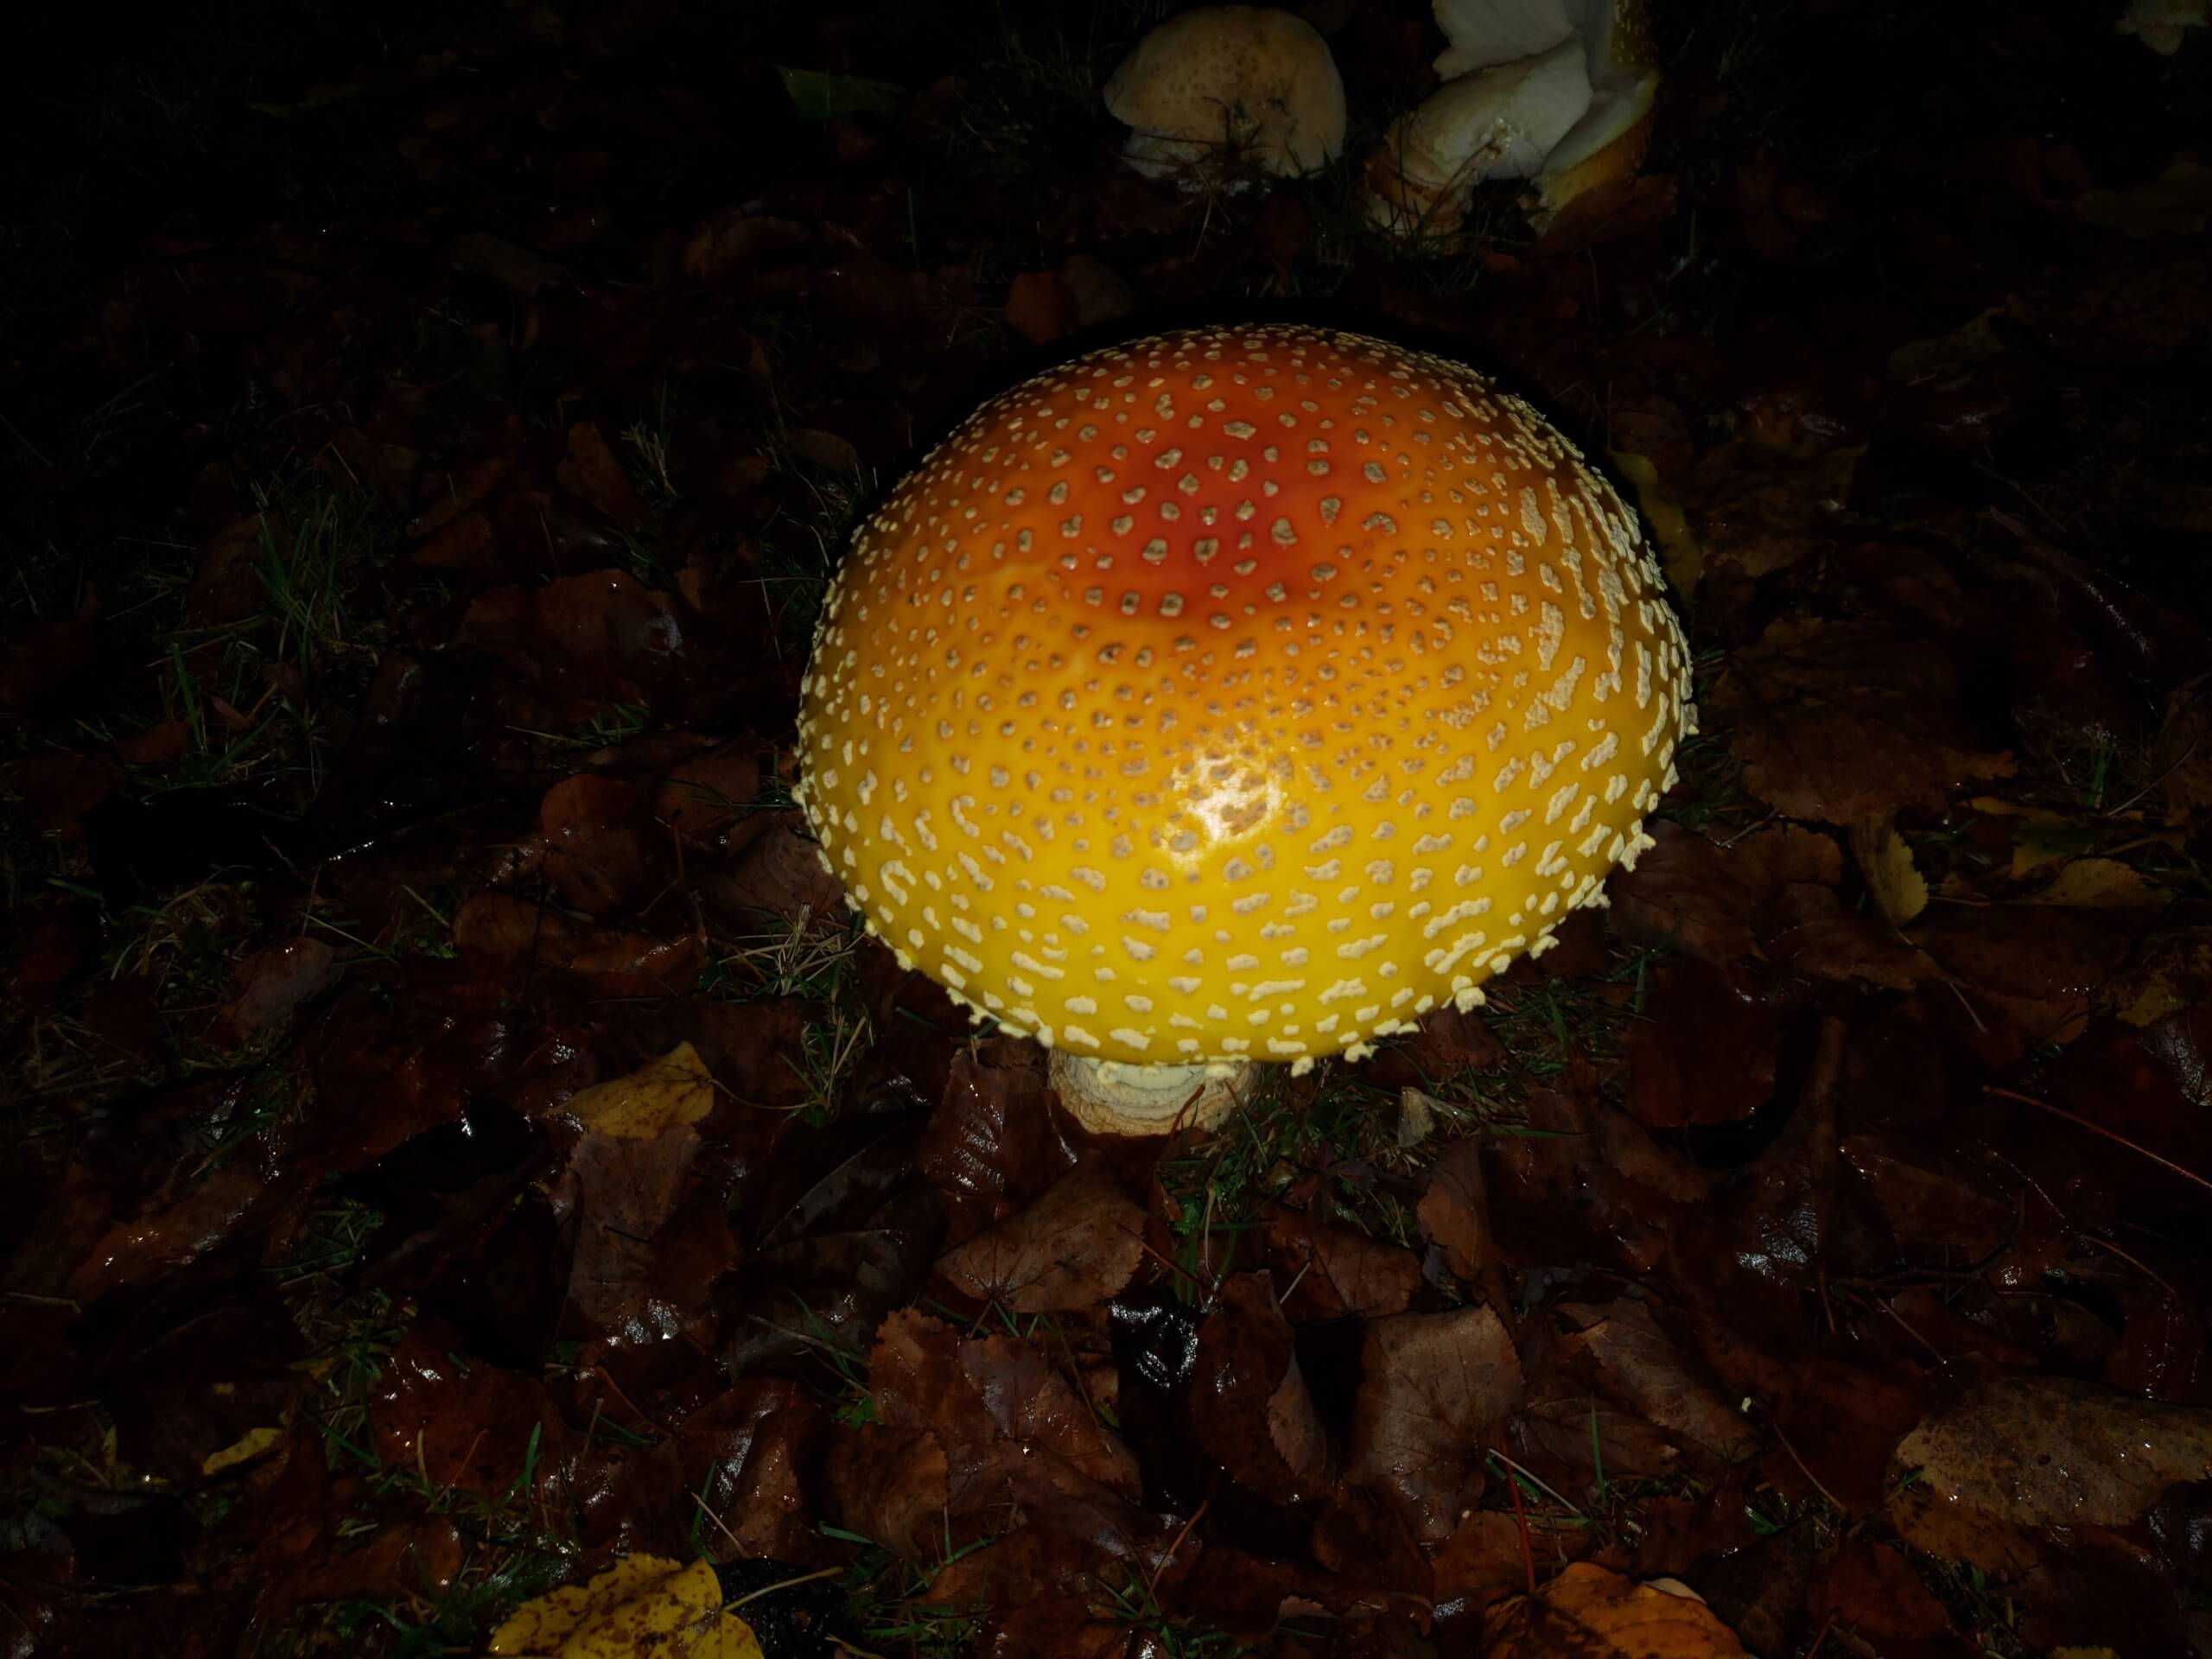 The Yellow/Orange Cap of the American Yellow Fly Agaric Mushroom